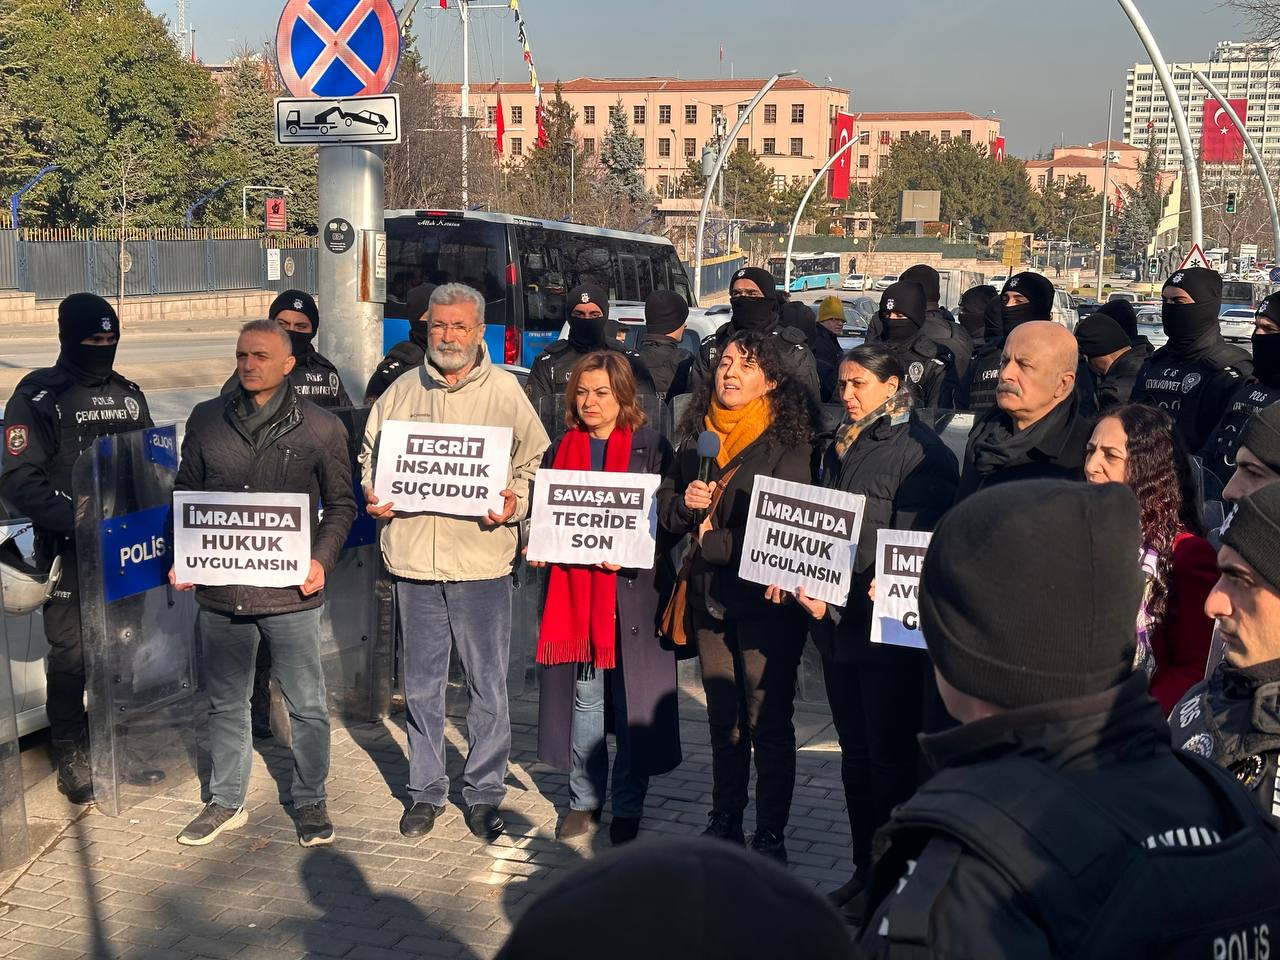 HDP deputies continue protest against isolation A. Öcalan in Ankara